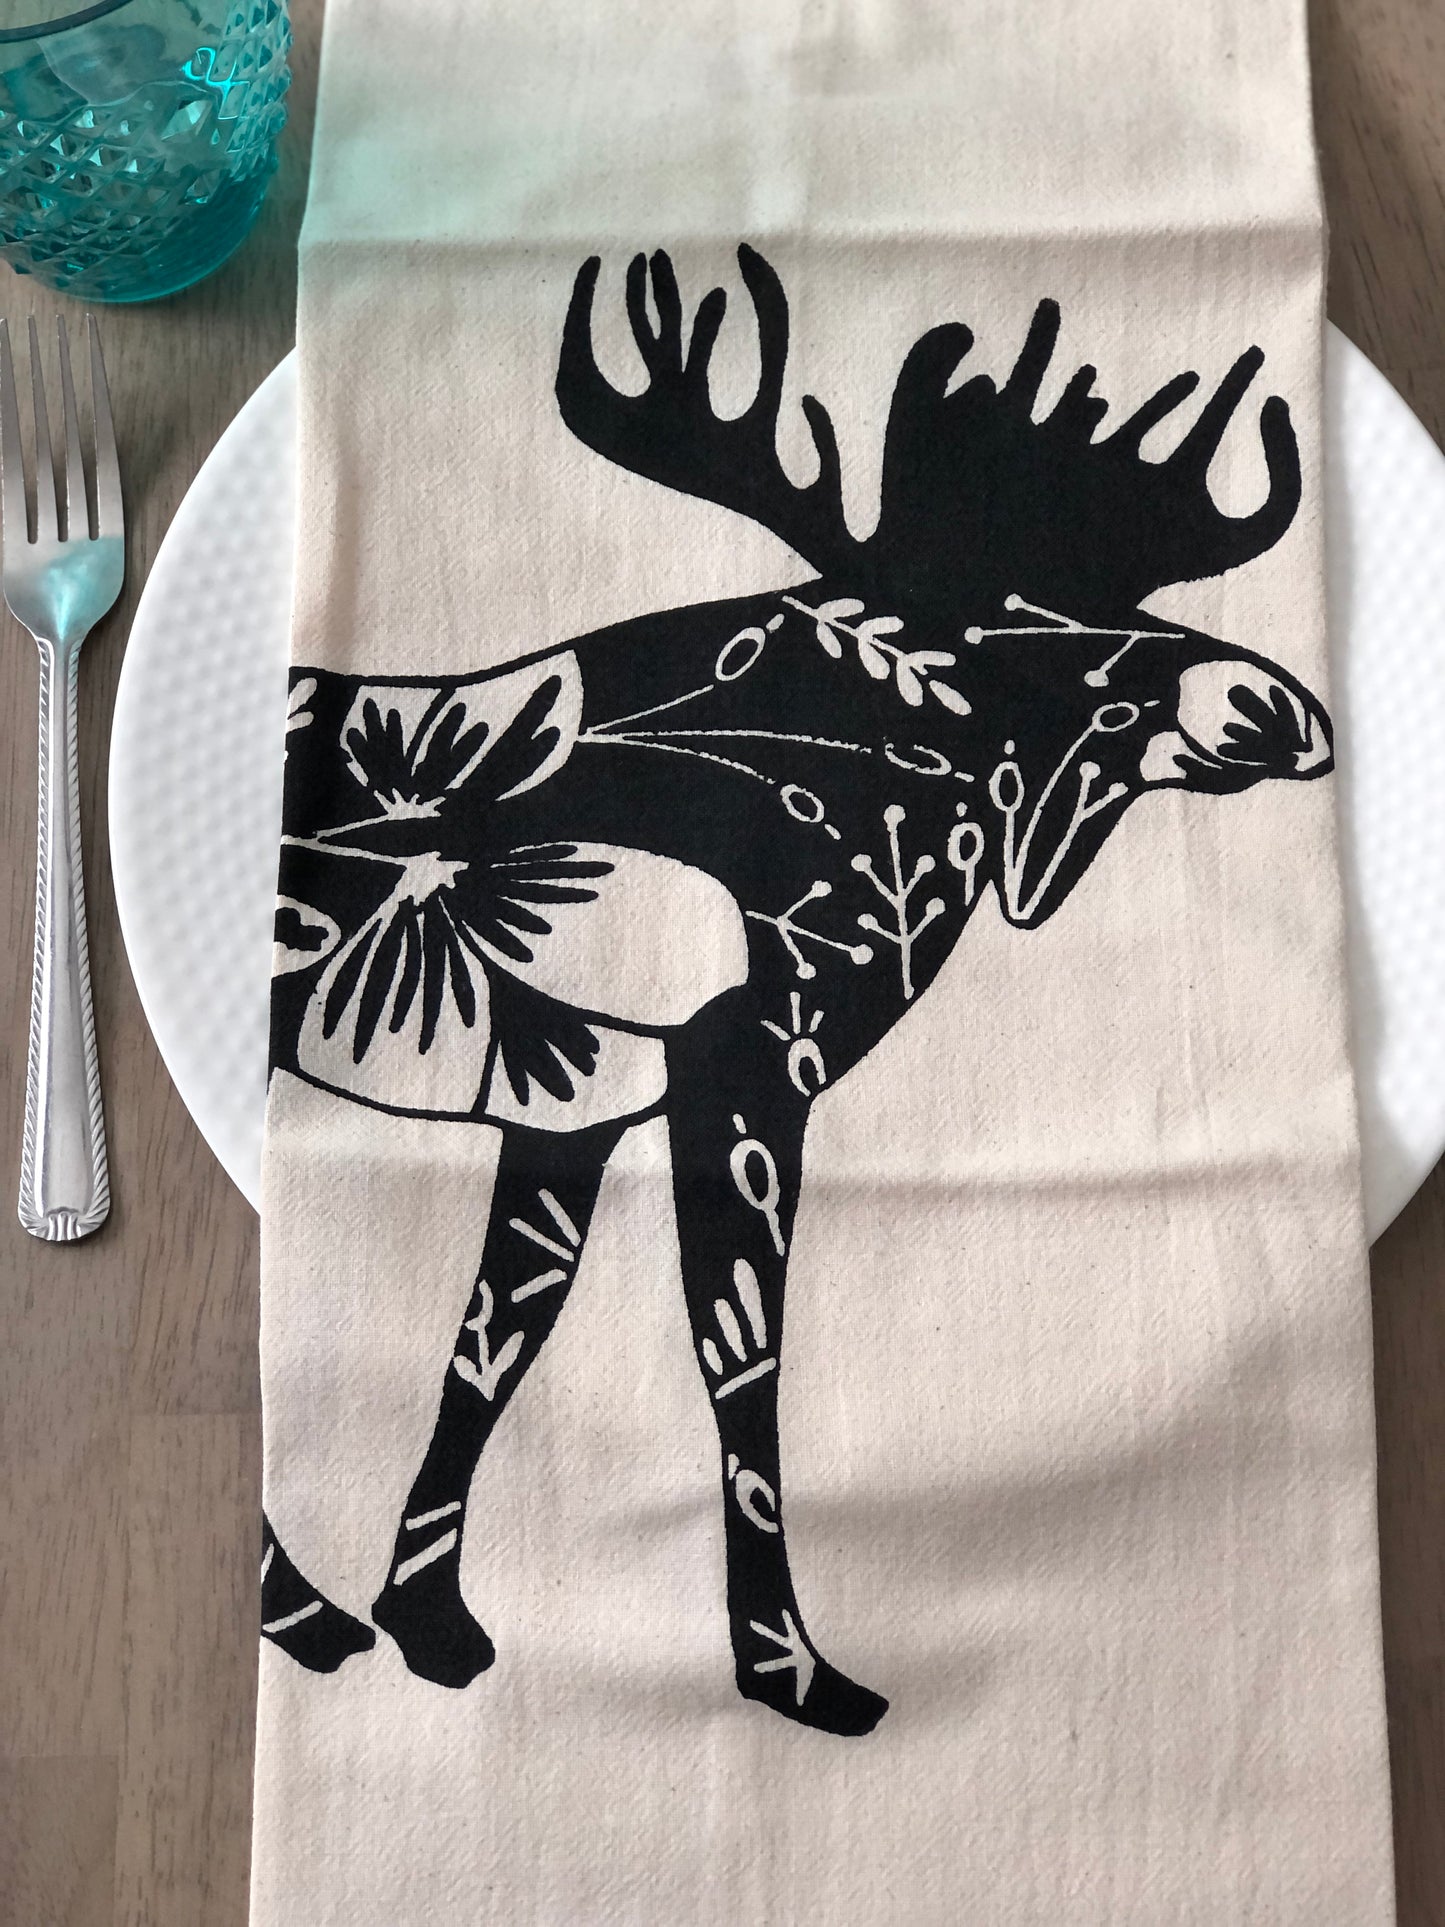 Moose dinner napkin set